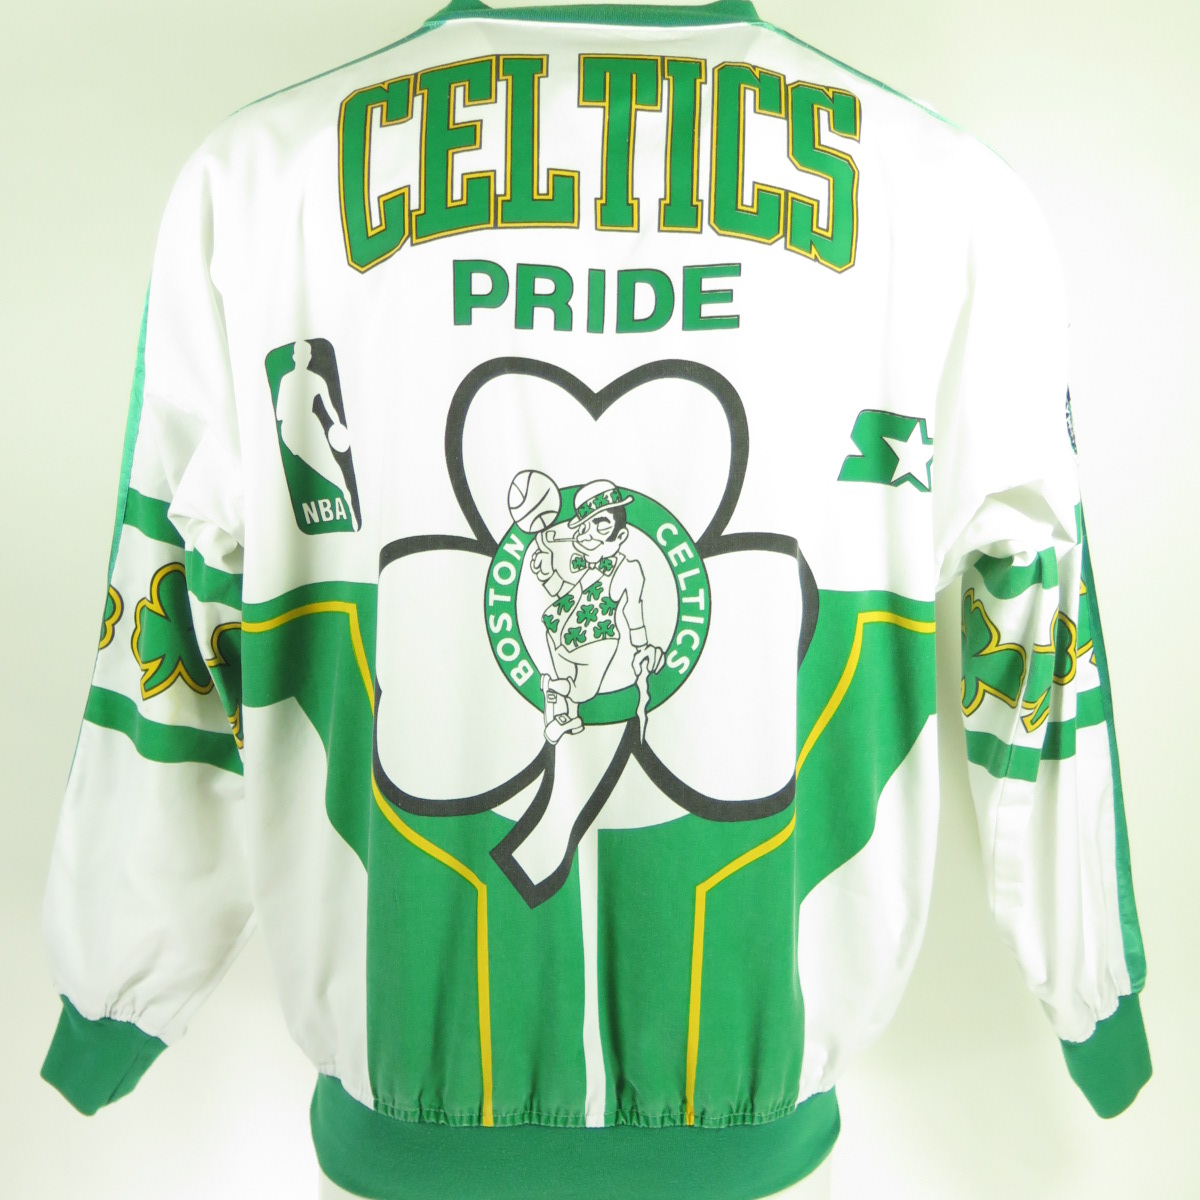 Vintage 80s Boston Celtics Champion Sweatshirt M NBA Basketball Green